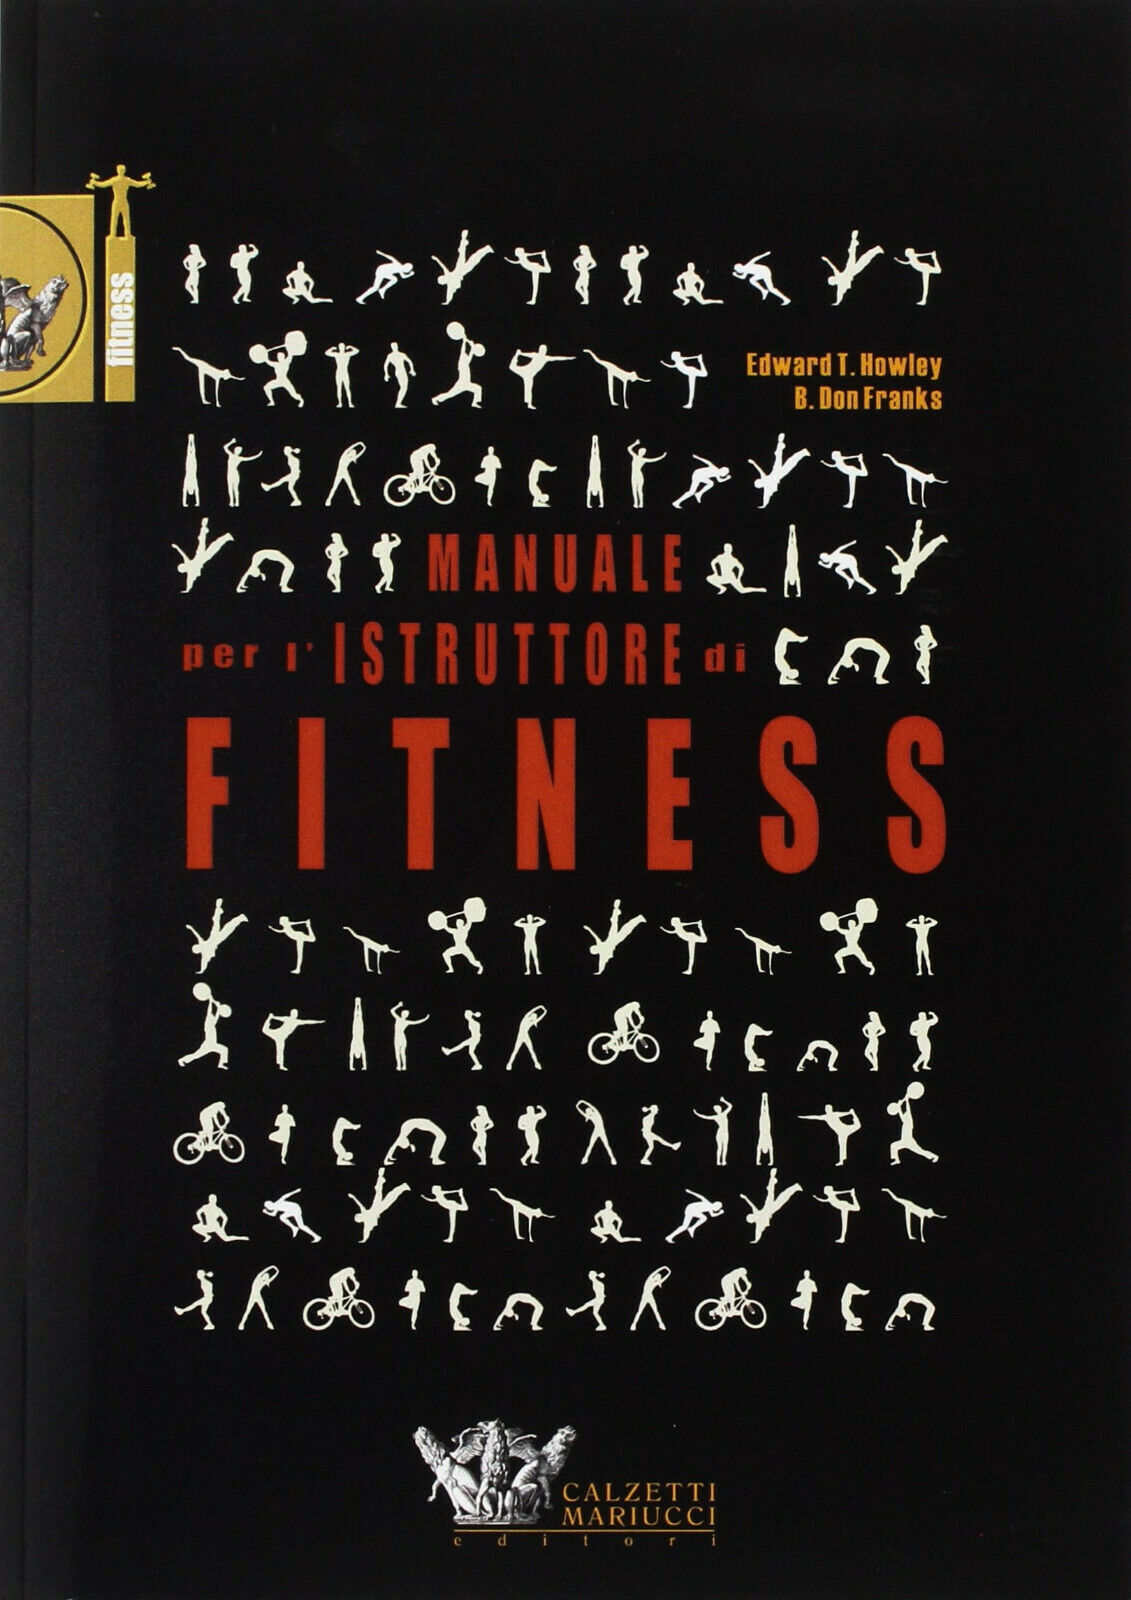 Manuale per l'istruttore di fitness - T. Edward Howley, B. Don Franks - 2019